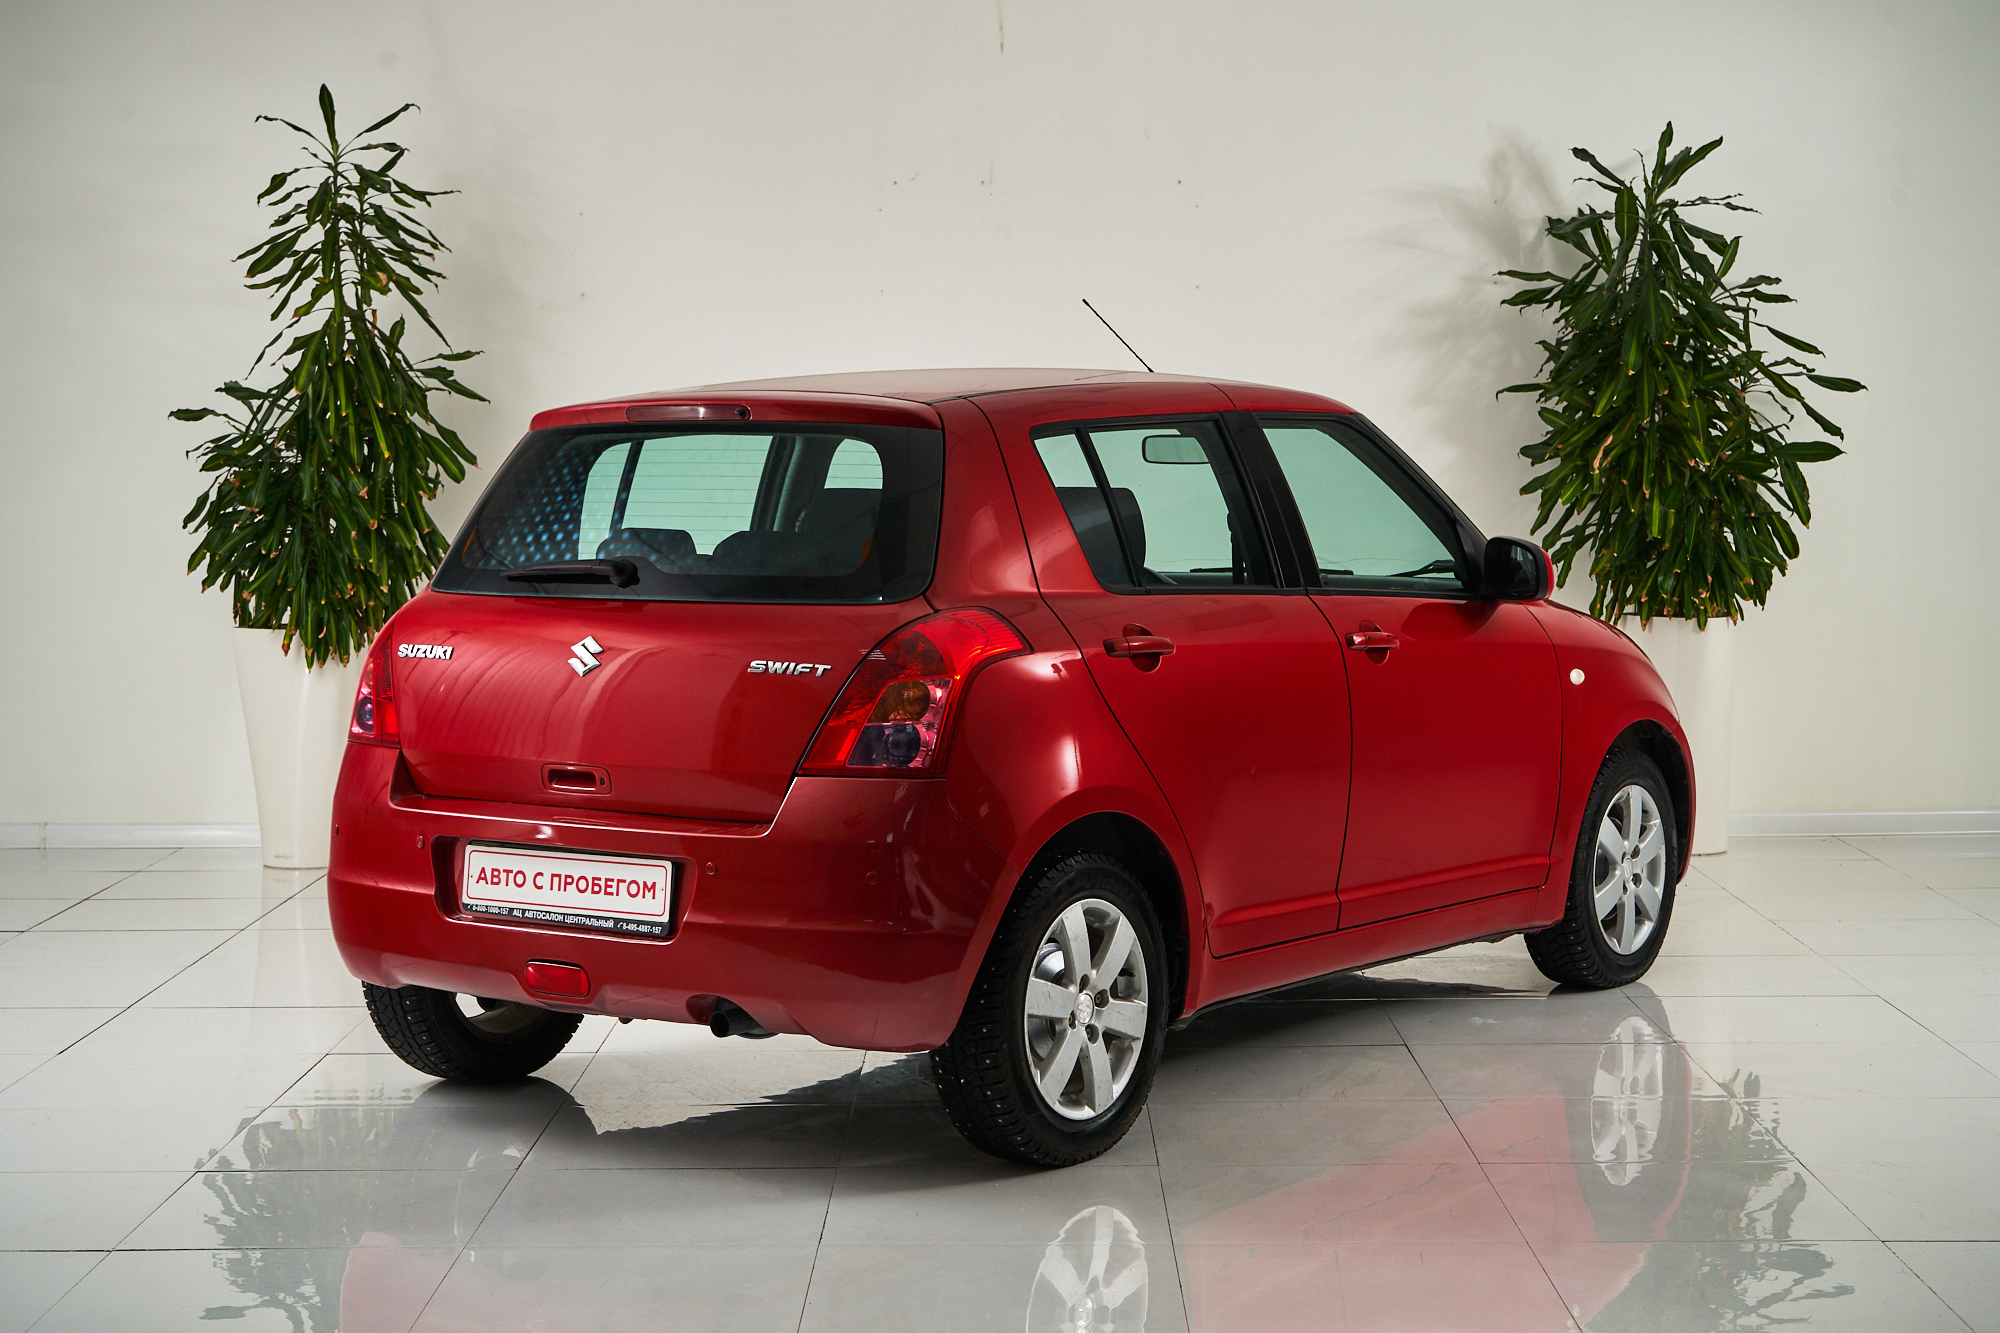 2007 Suzuki Swift III №6189357, Красный, 368235 рублей - вид 5